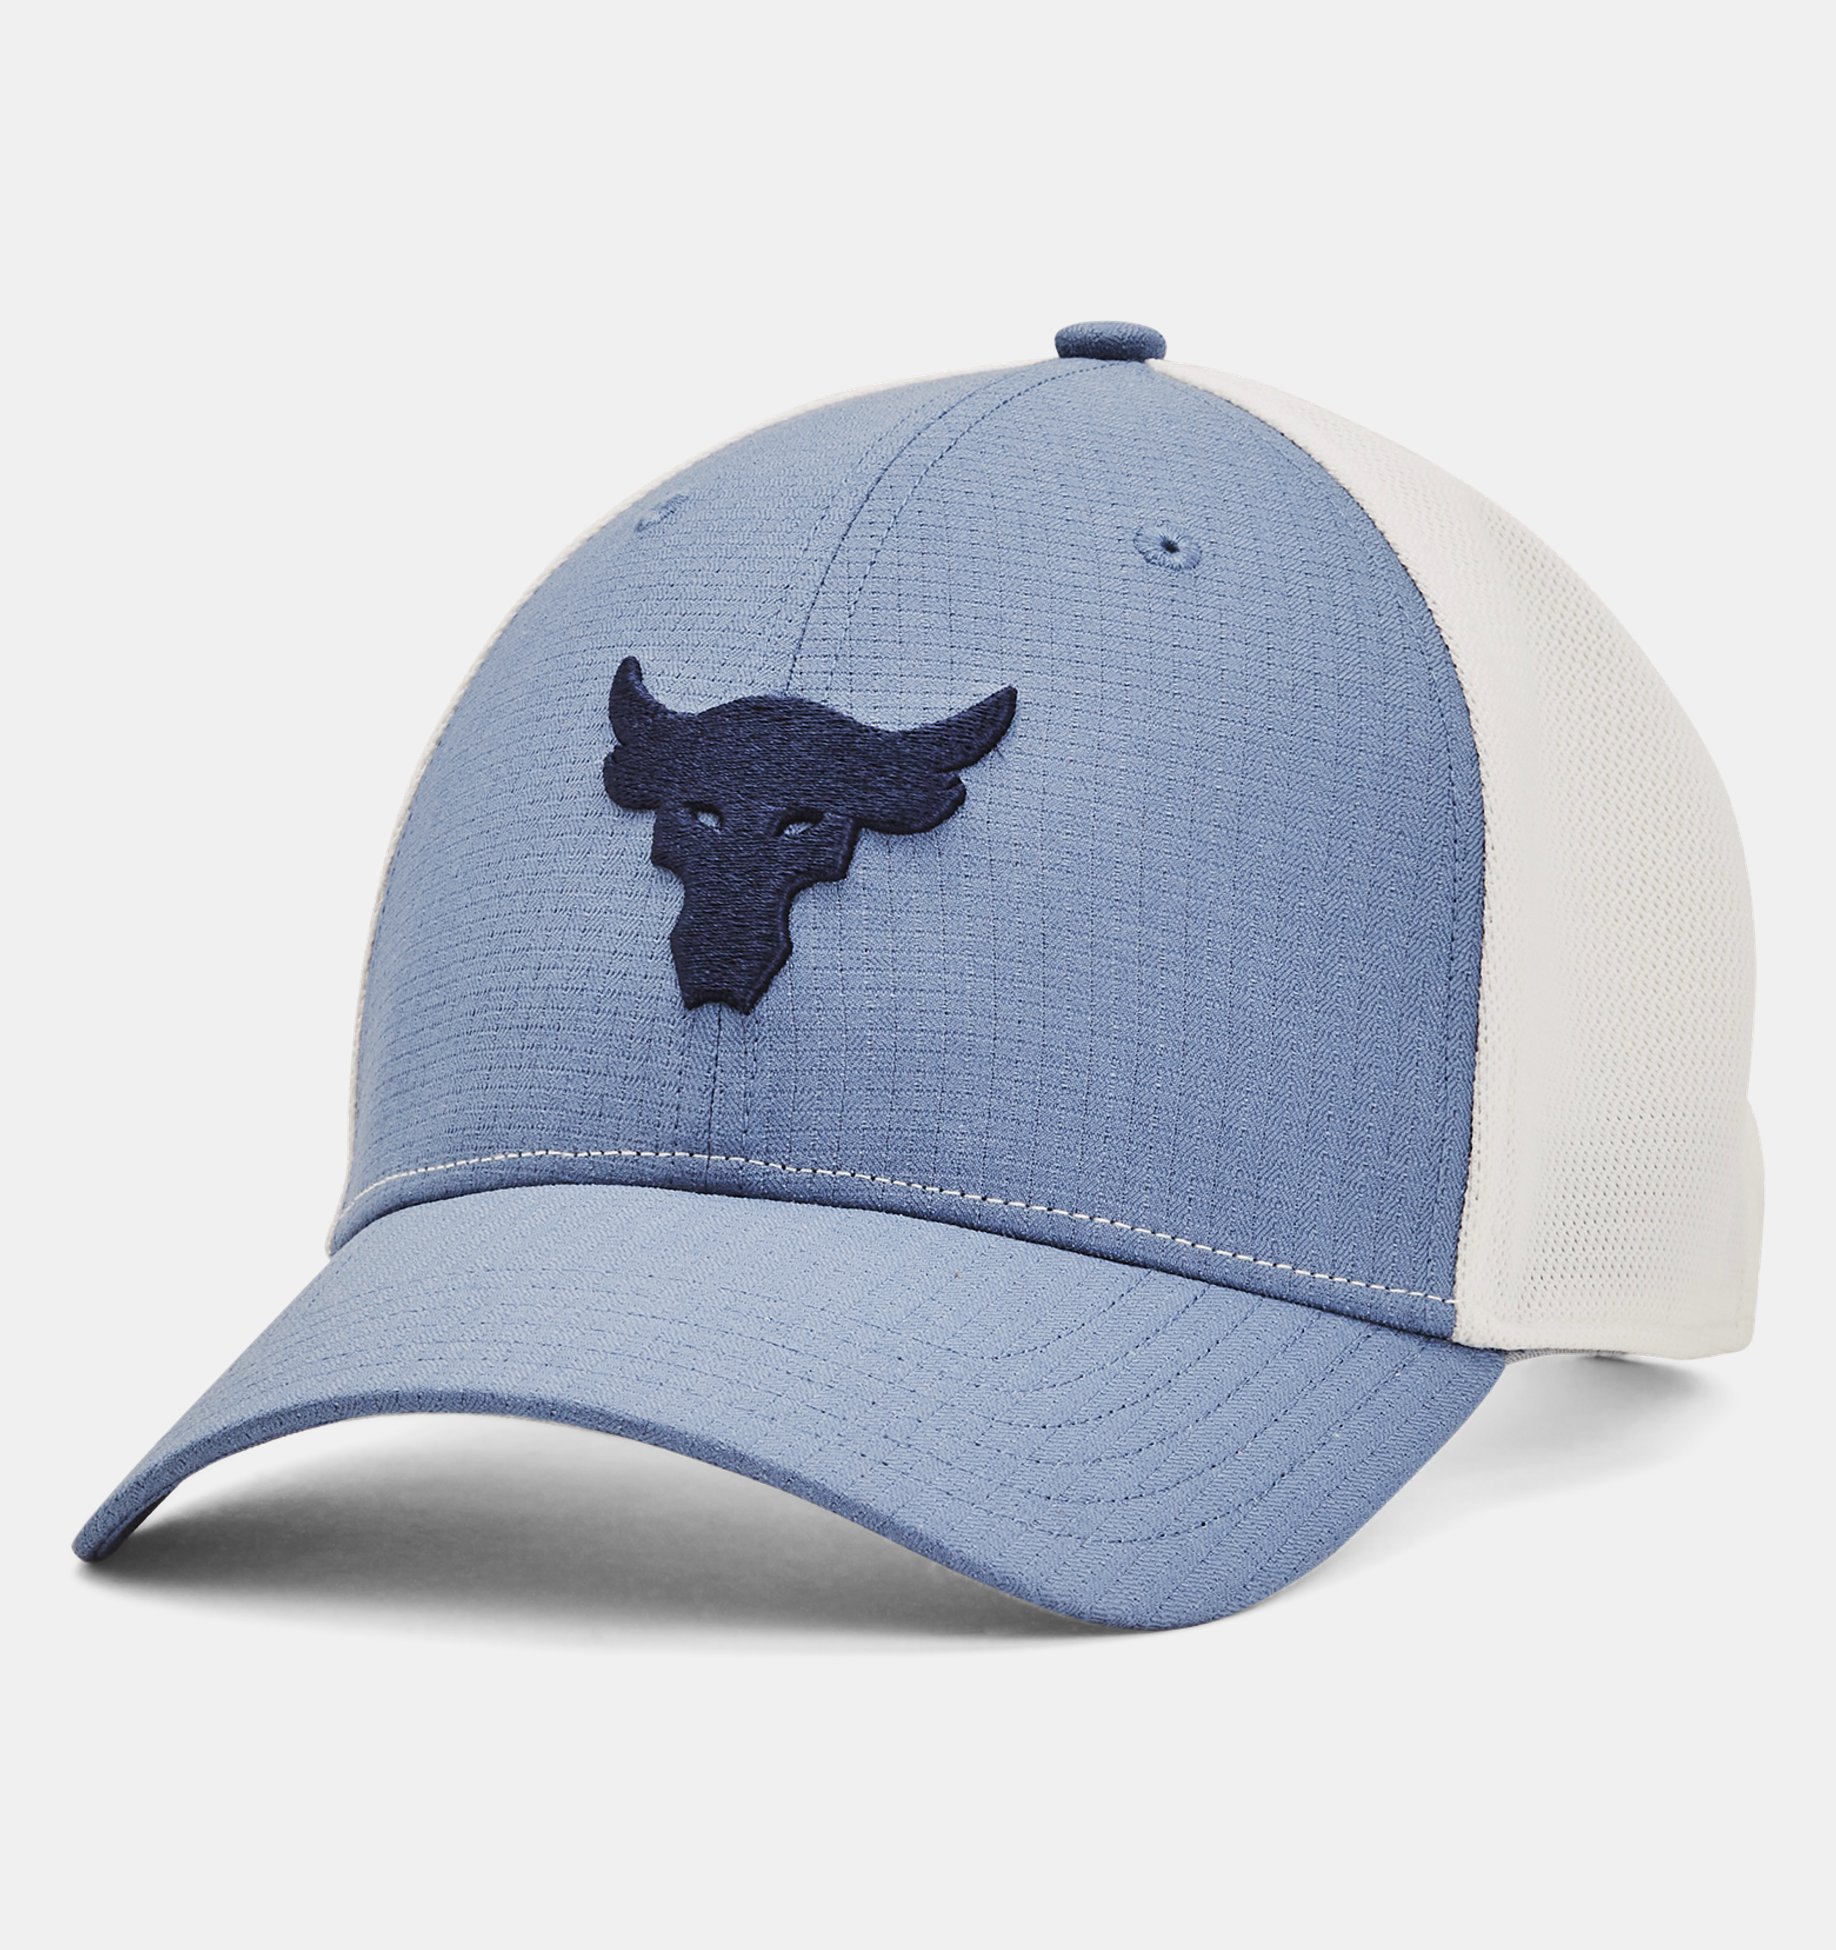 Men's Project Trucker Hat Under Armour